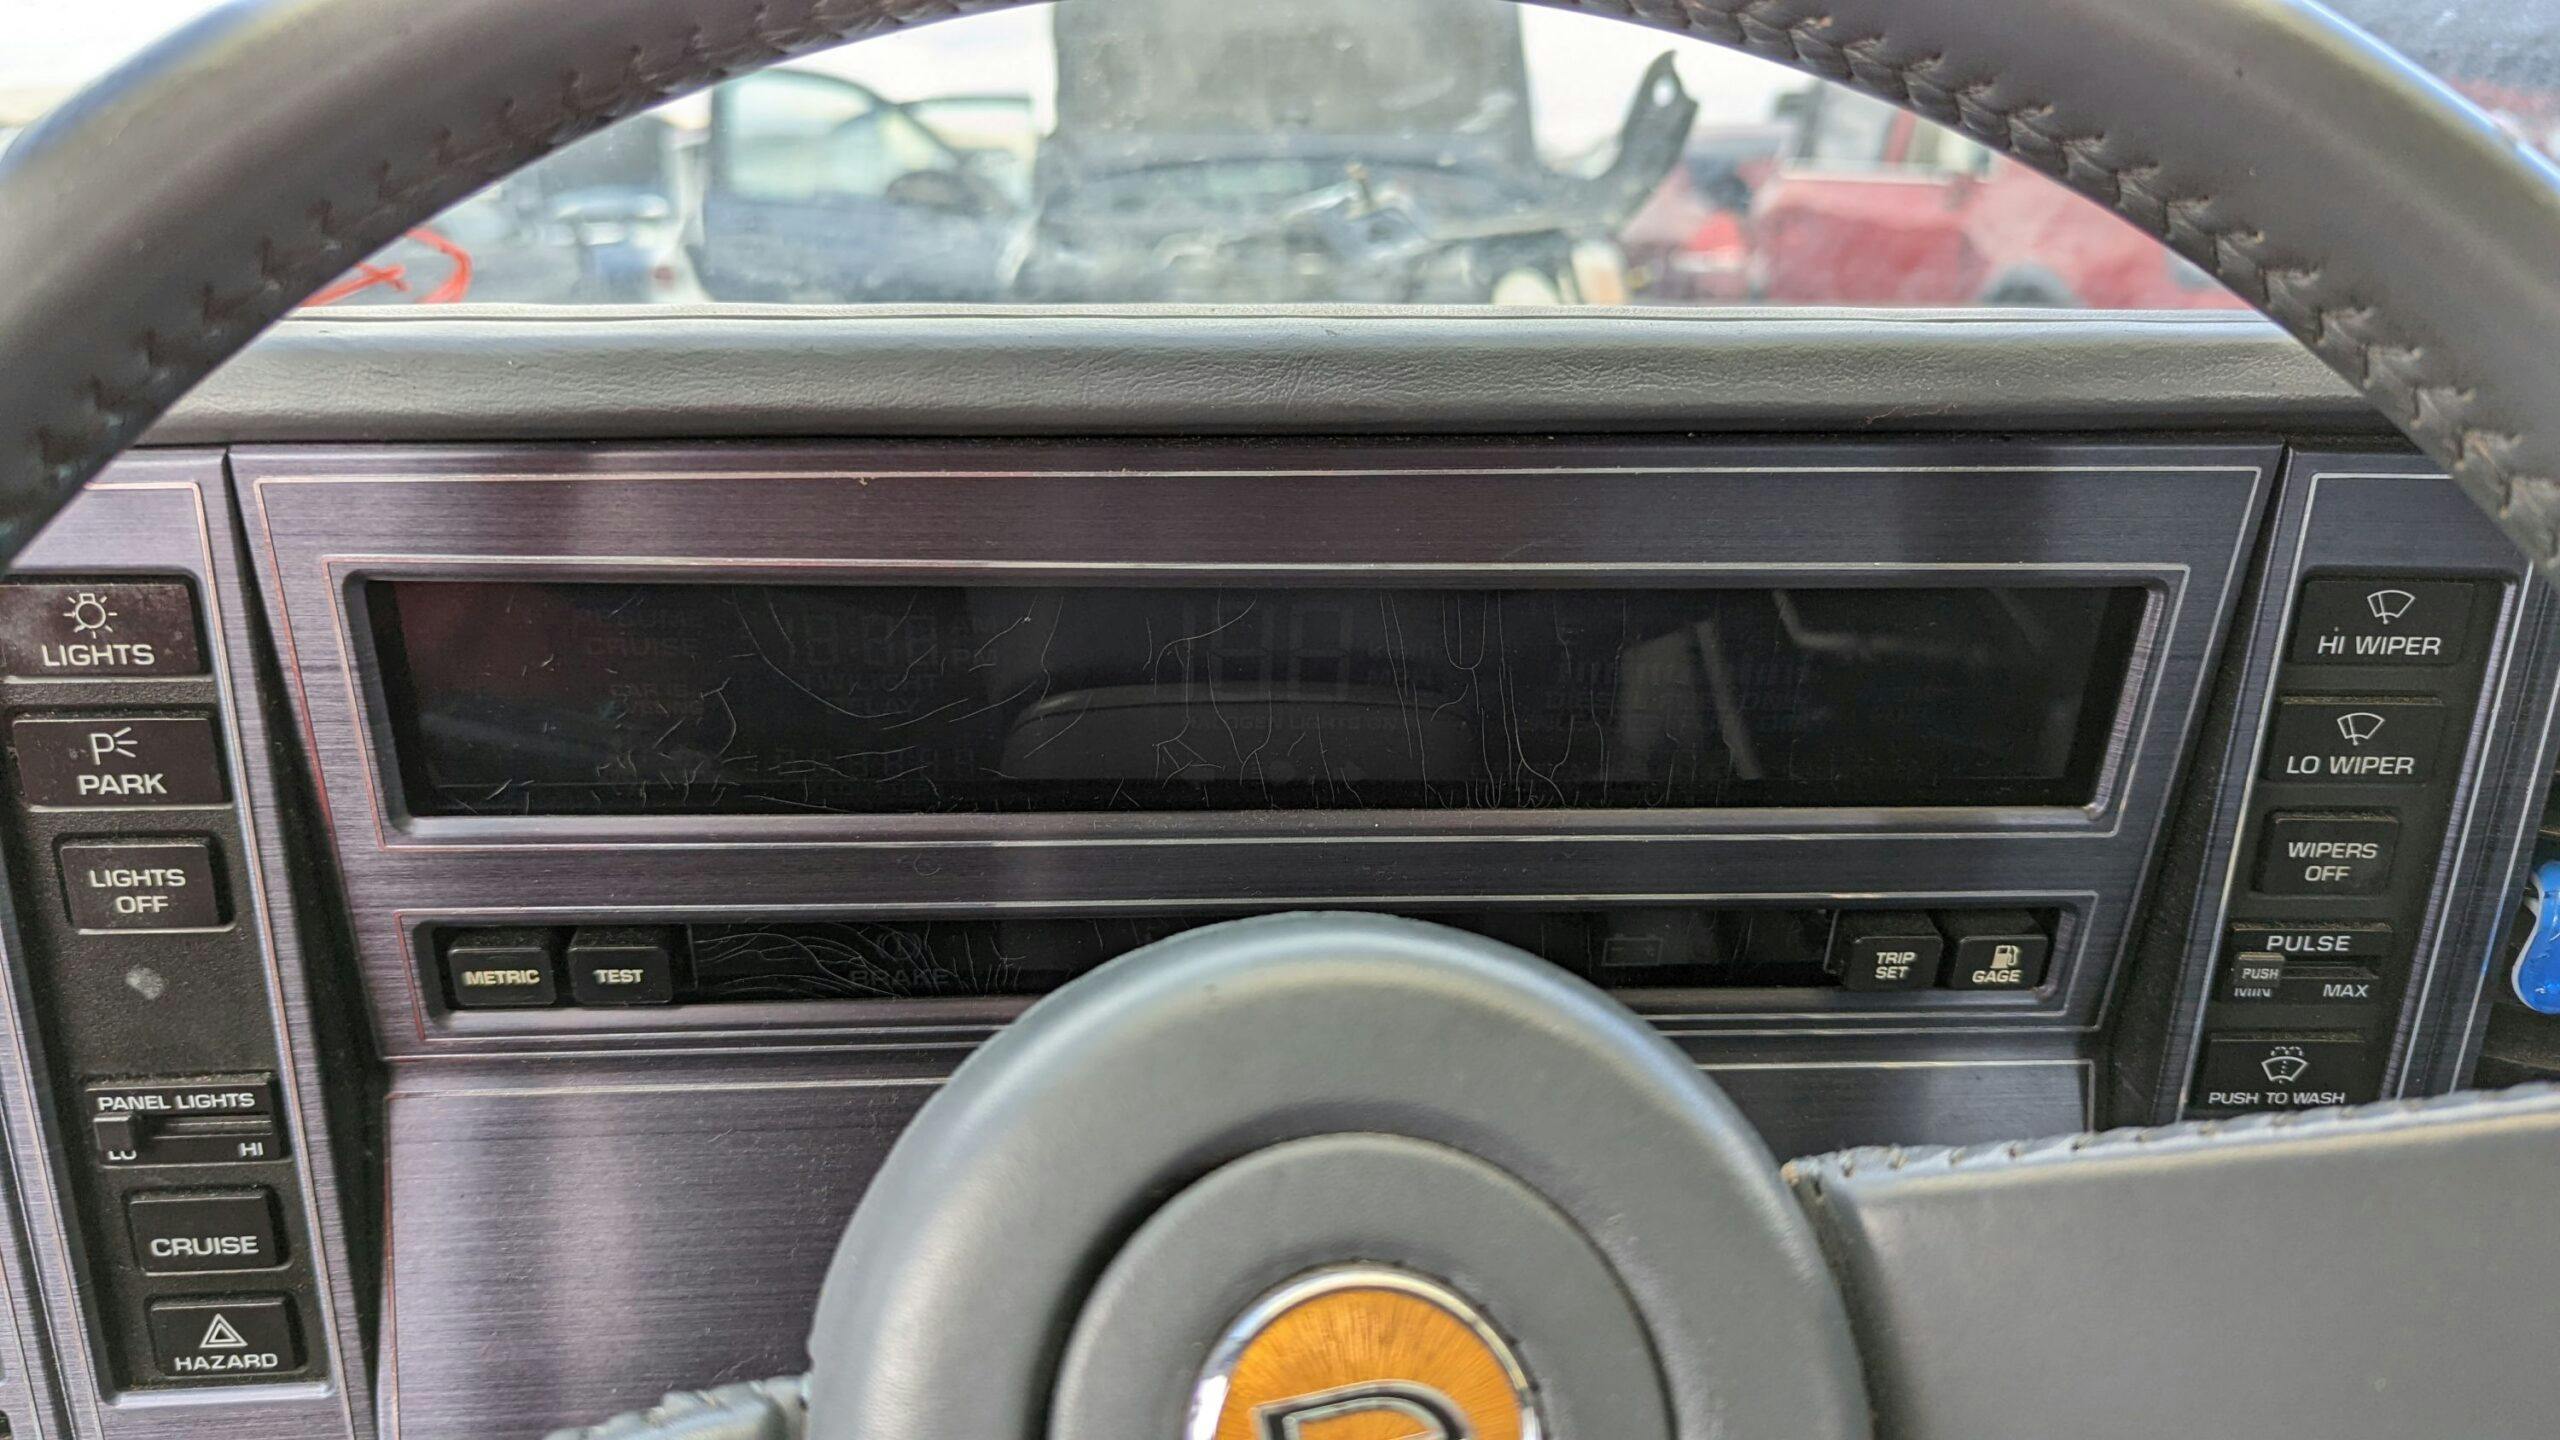 1989 Buick Reatta interior dash